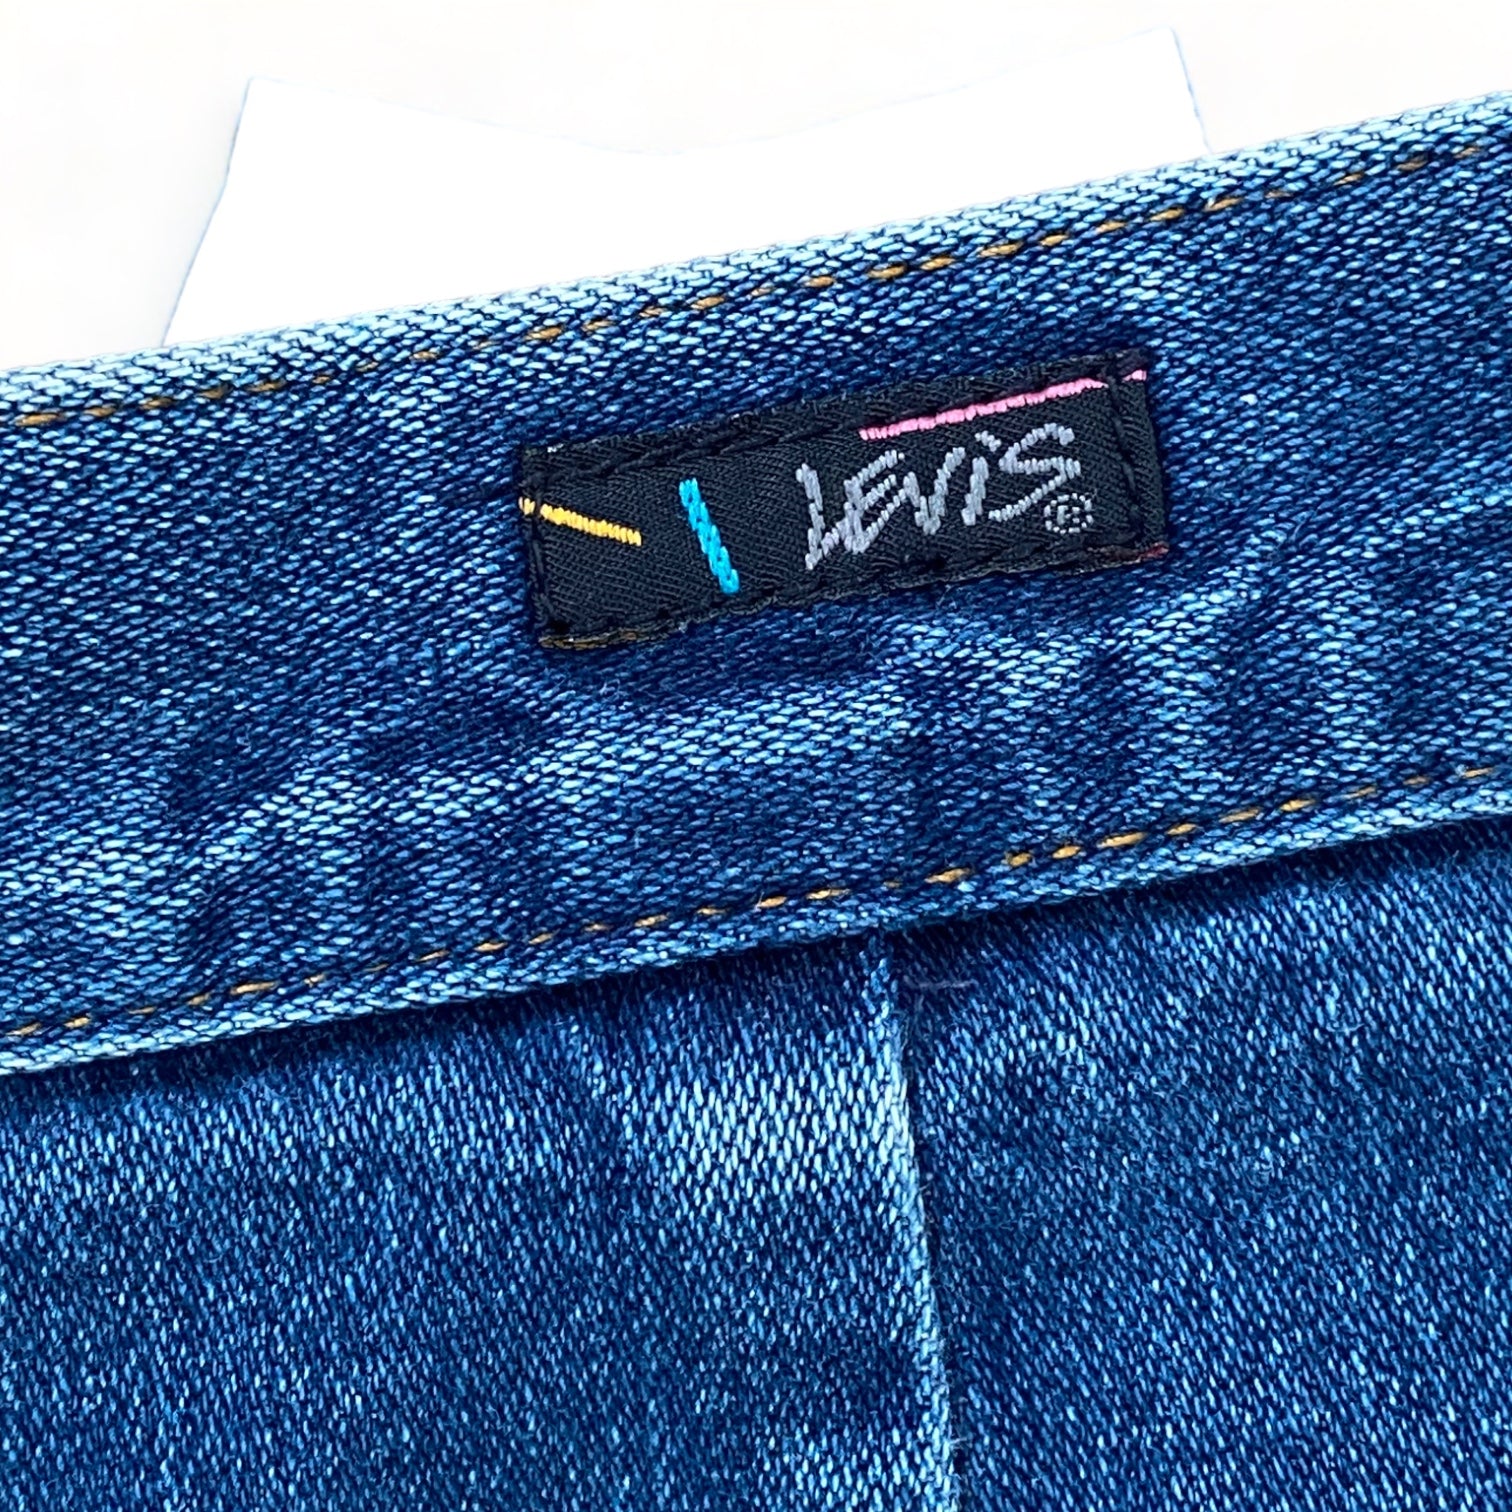 1980s Levi’s Jeans Center Leg Seam